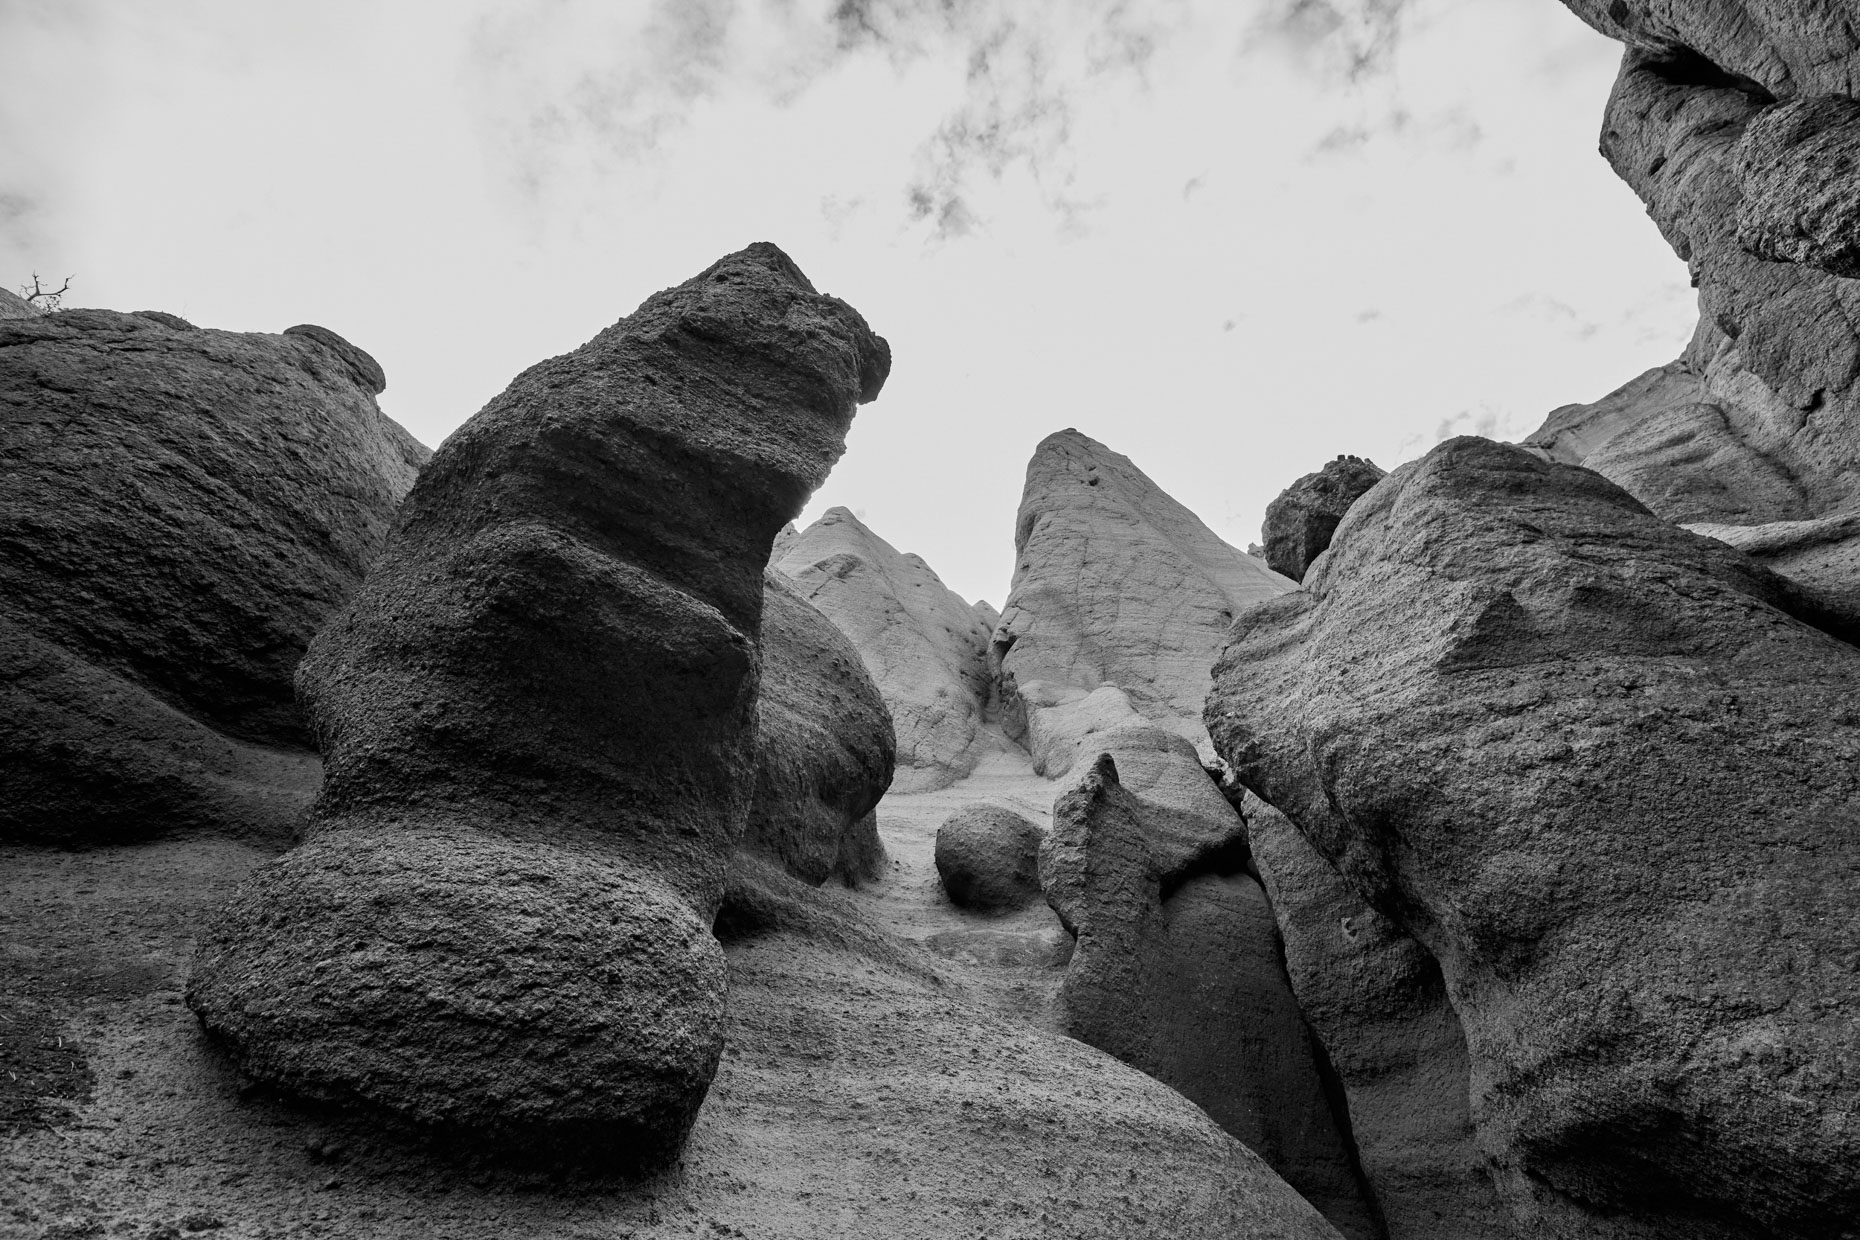 Red Mountain Hoodoos-b&w looking up at eroded pillar hoodoo rocks inside extinct volcano